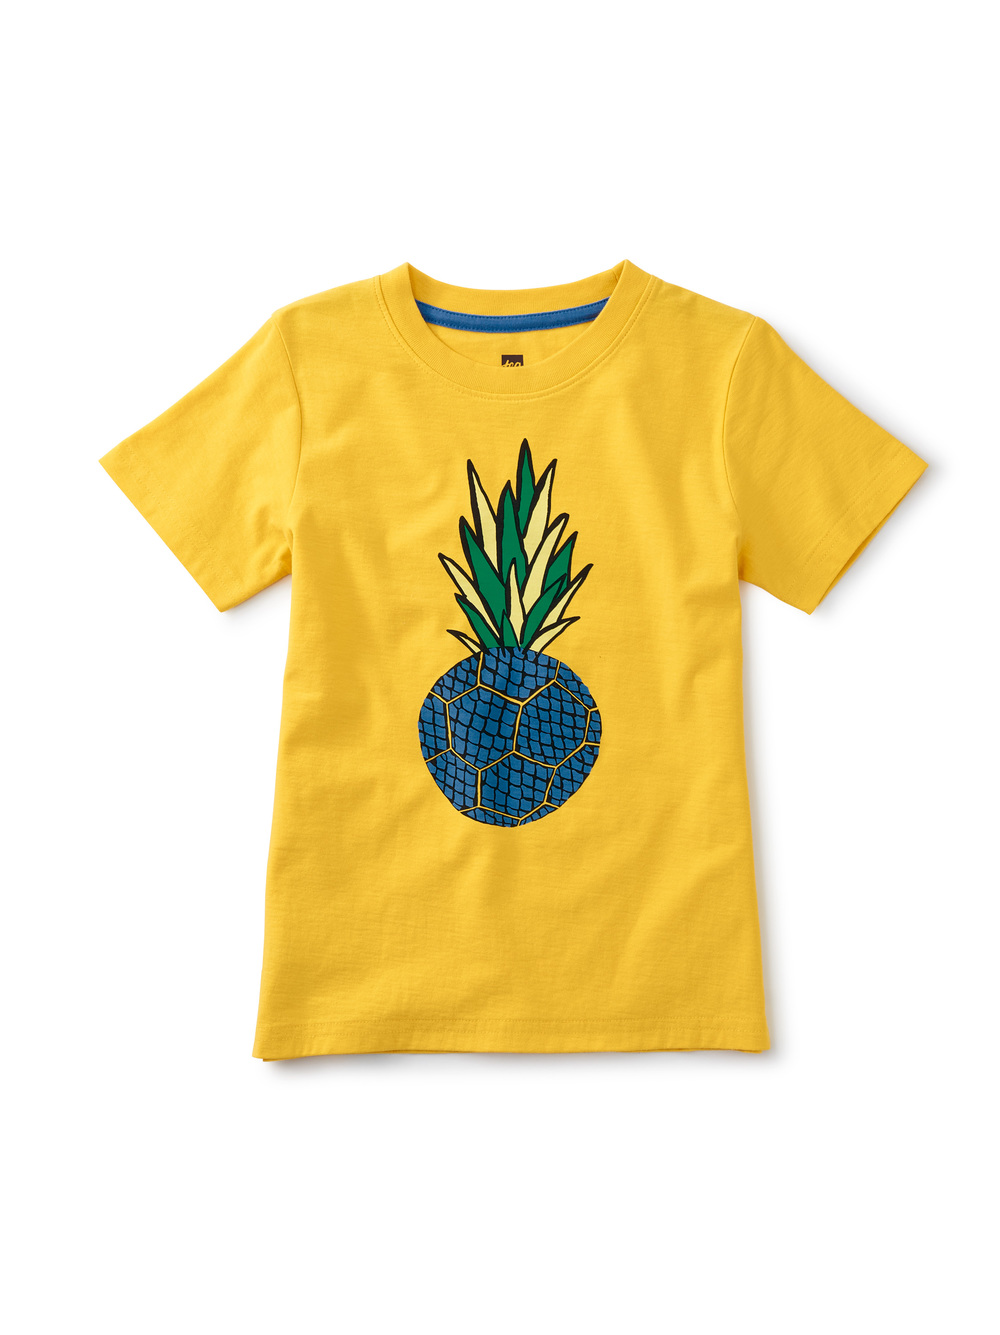 Soccer Pineapple Graphic Tee